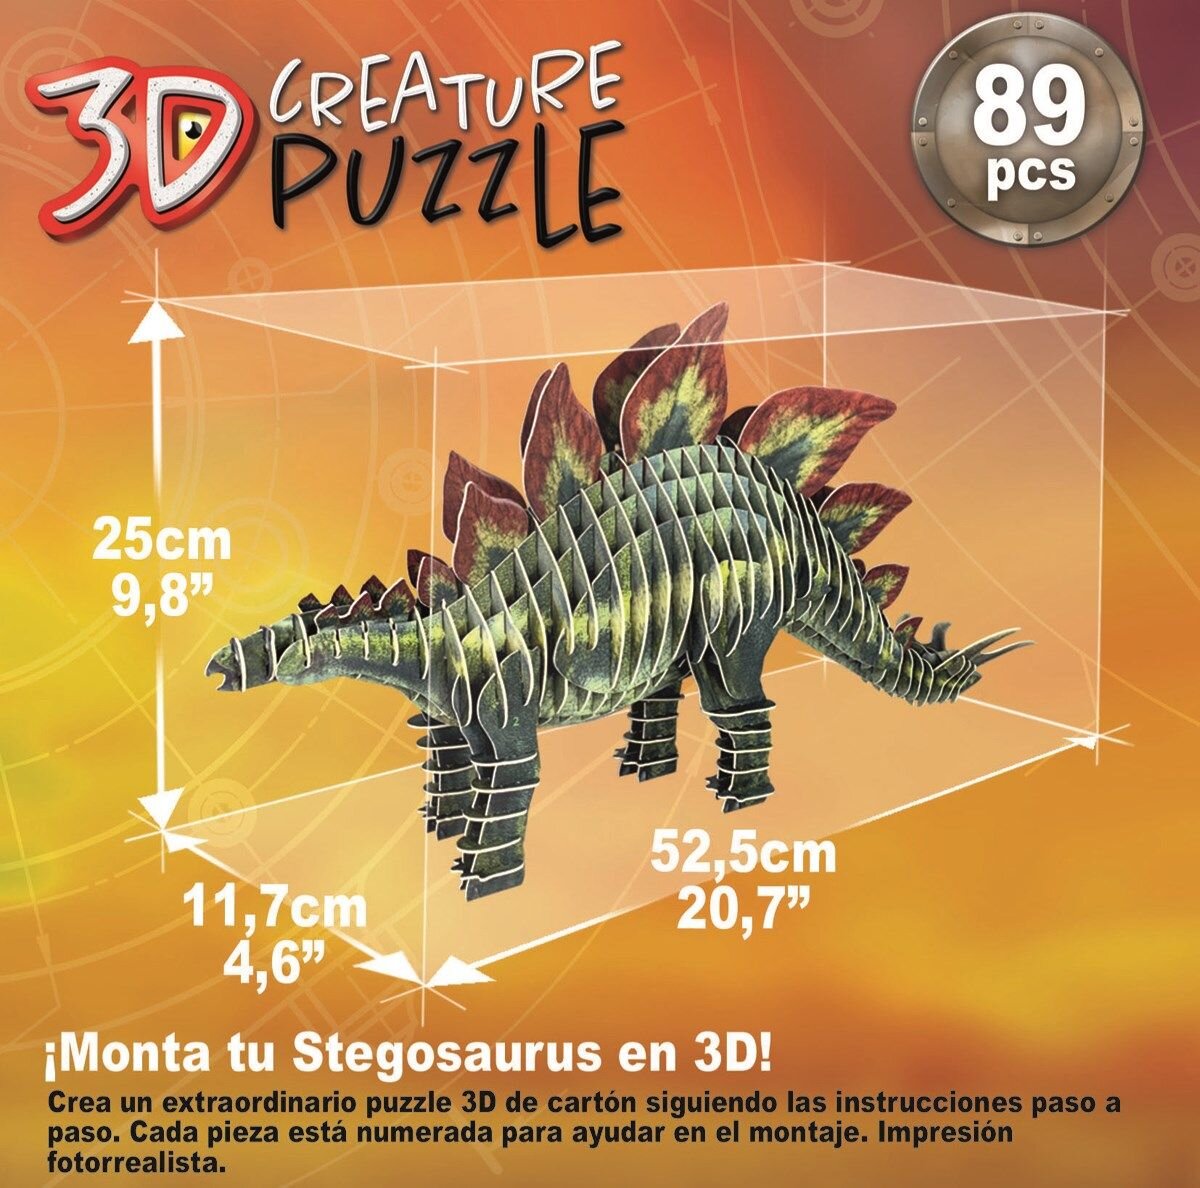 Educa 3D Puzzel - Stegosaurus 89 stukjes